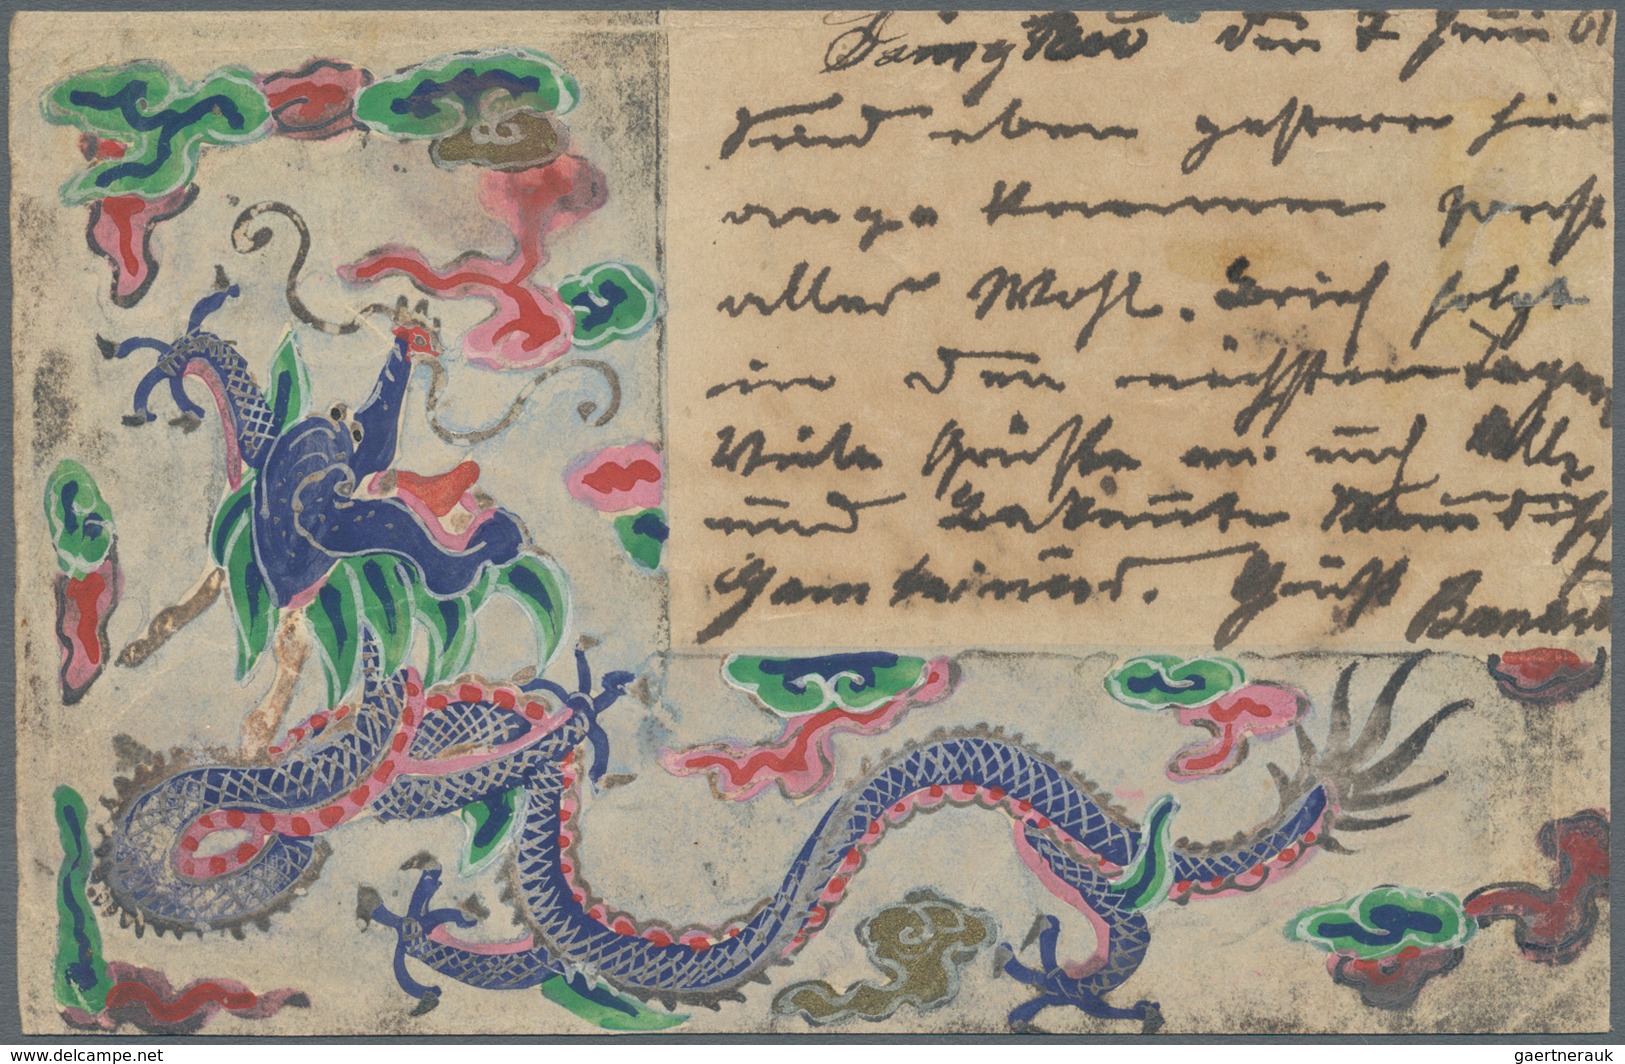 China - Ganzsachen: 1897, Card ICP 1 C. Cto "PEKING" Used As Form Franked Kiautschou 5 P. Tied "TSIN - Ansichtskarten